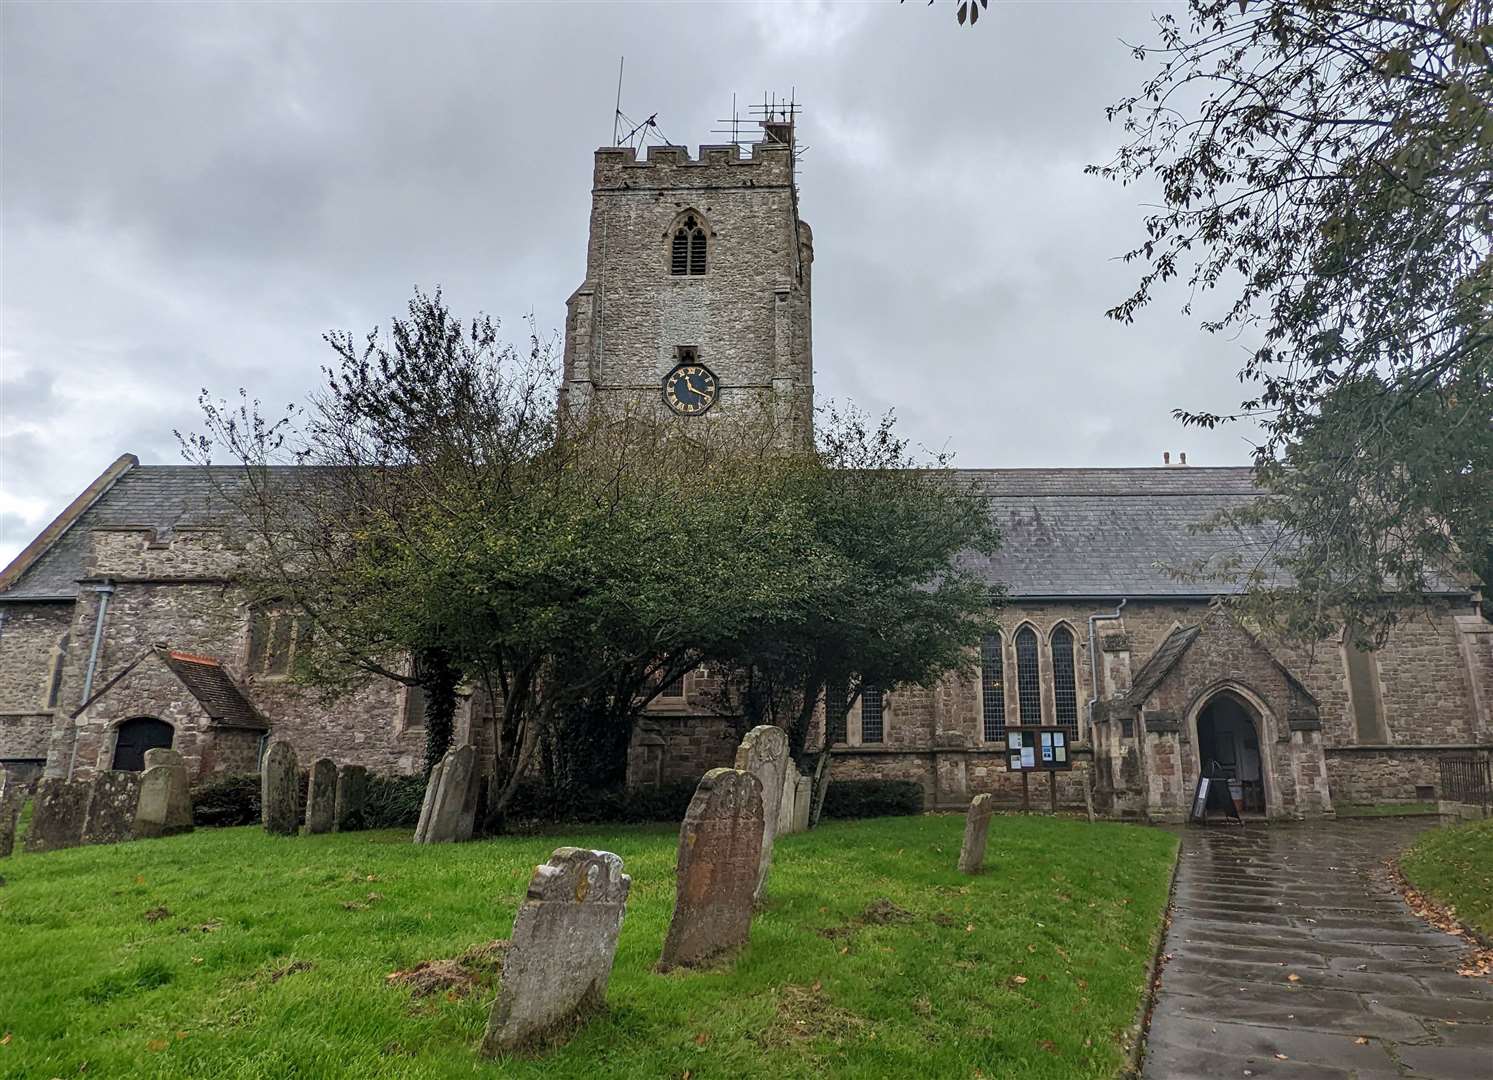 St Eanswythe’s church in Folkestone